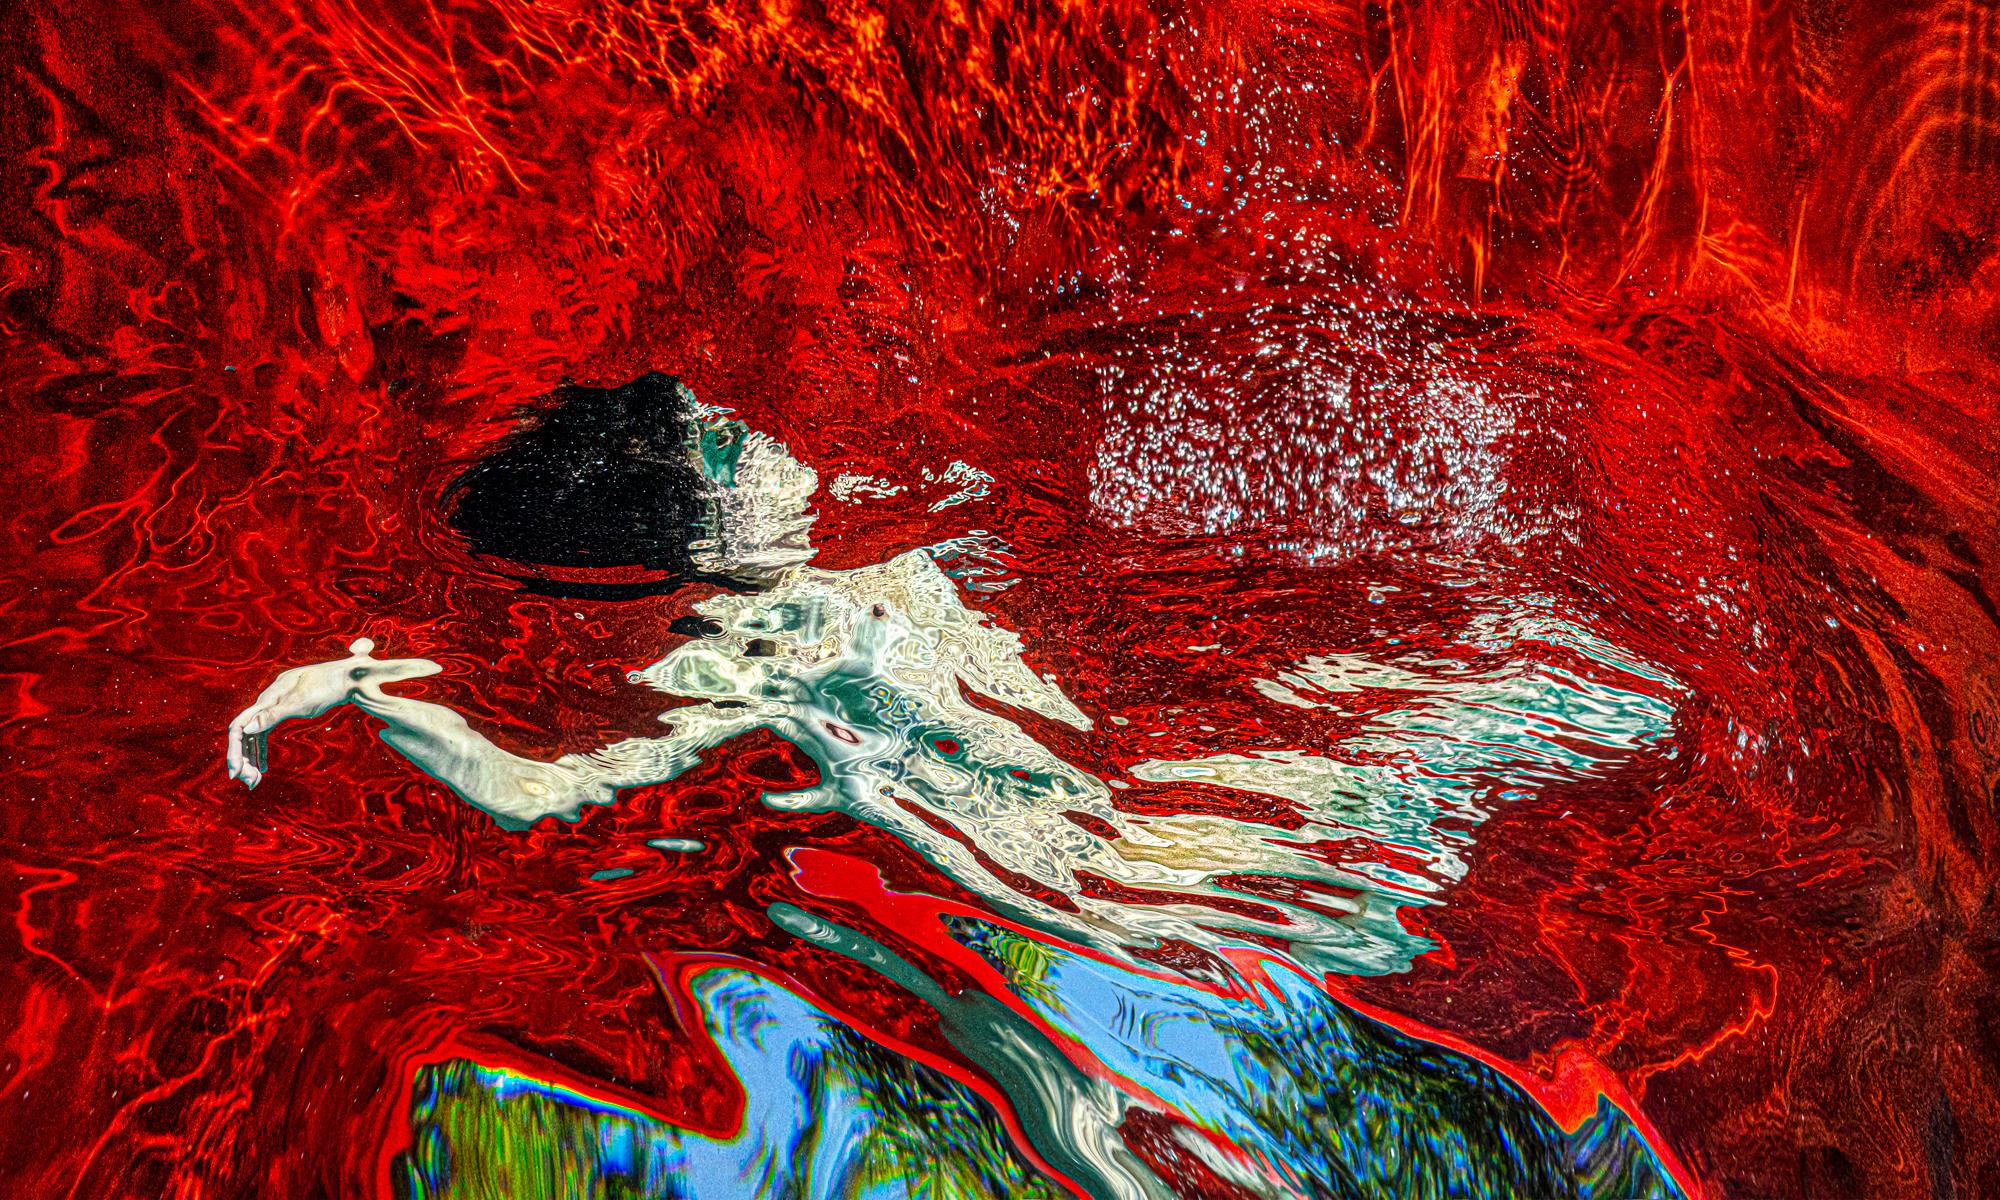 Abstract Photograph Alex Sher - Private Pool - photographie de nu sous-marin - impression acrylique 22" x 36"